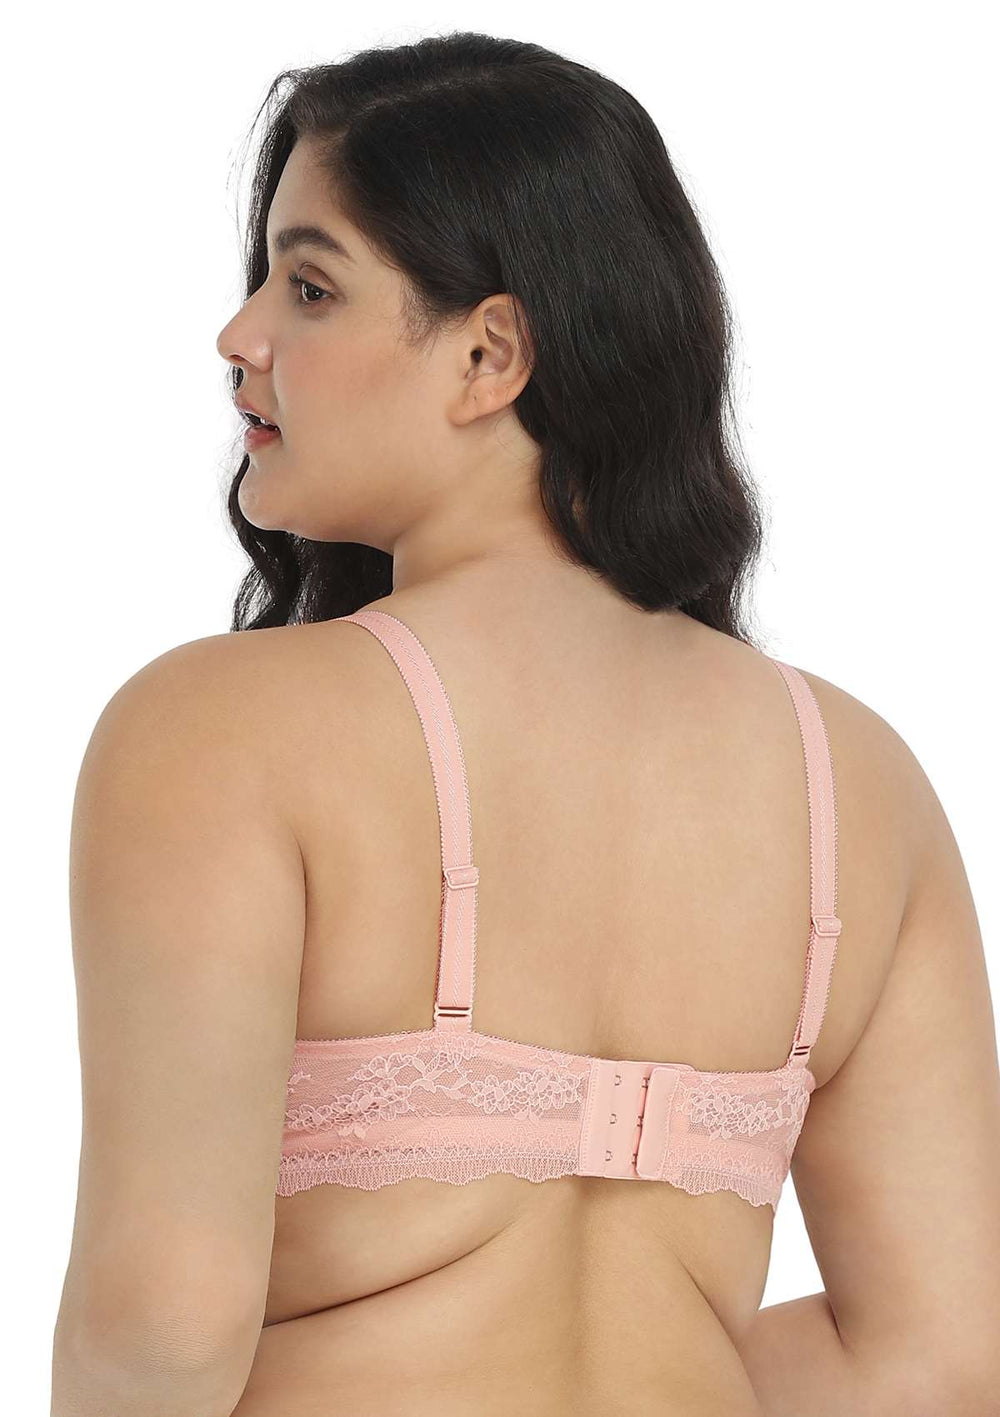 Buy Sisterhood imported bra lace cotton in pnly ₨ 1,499 - Sadarexpress